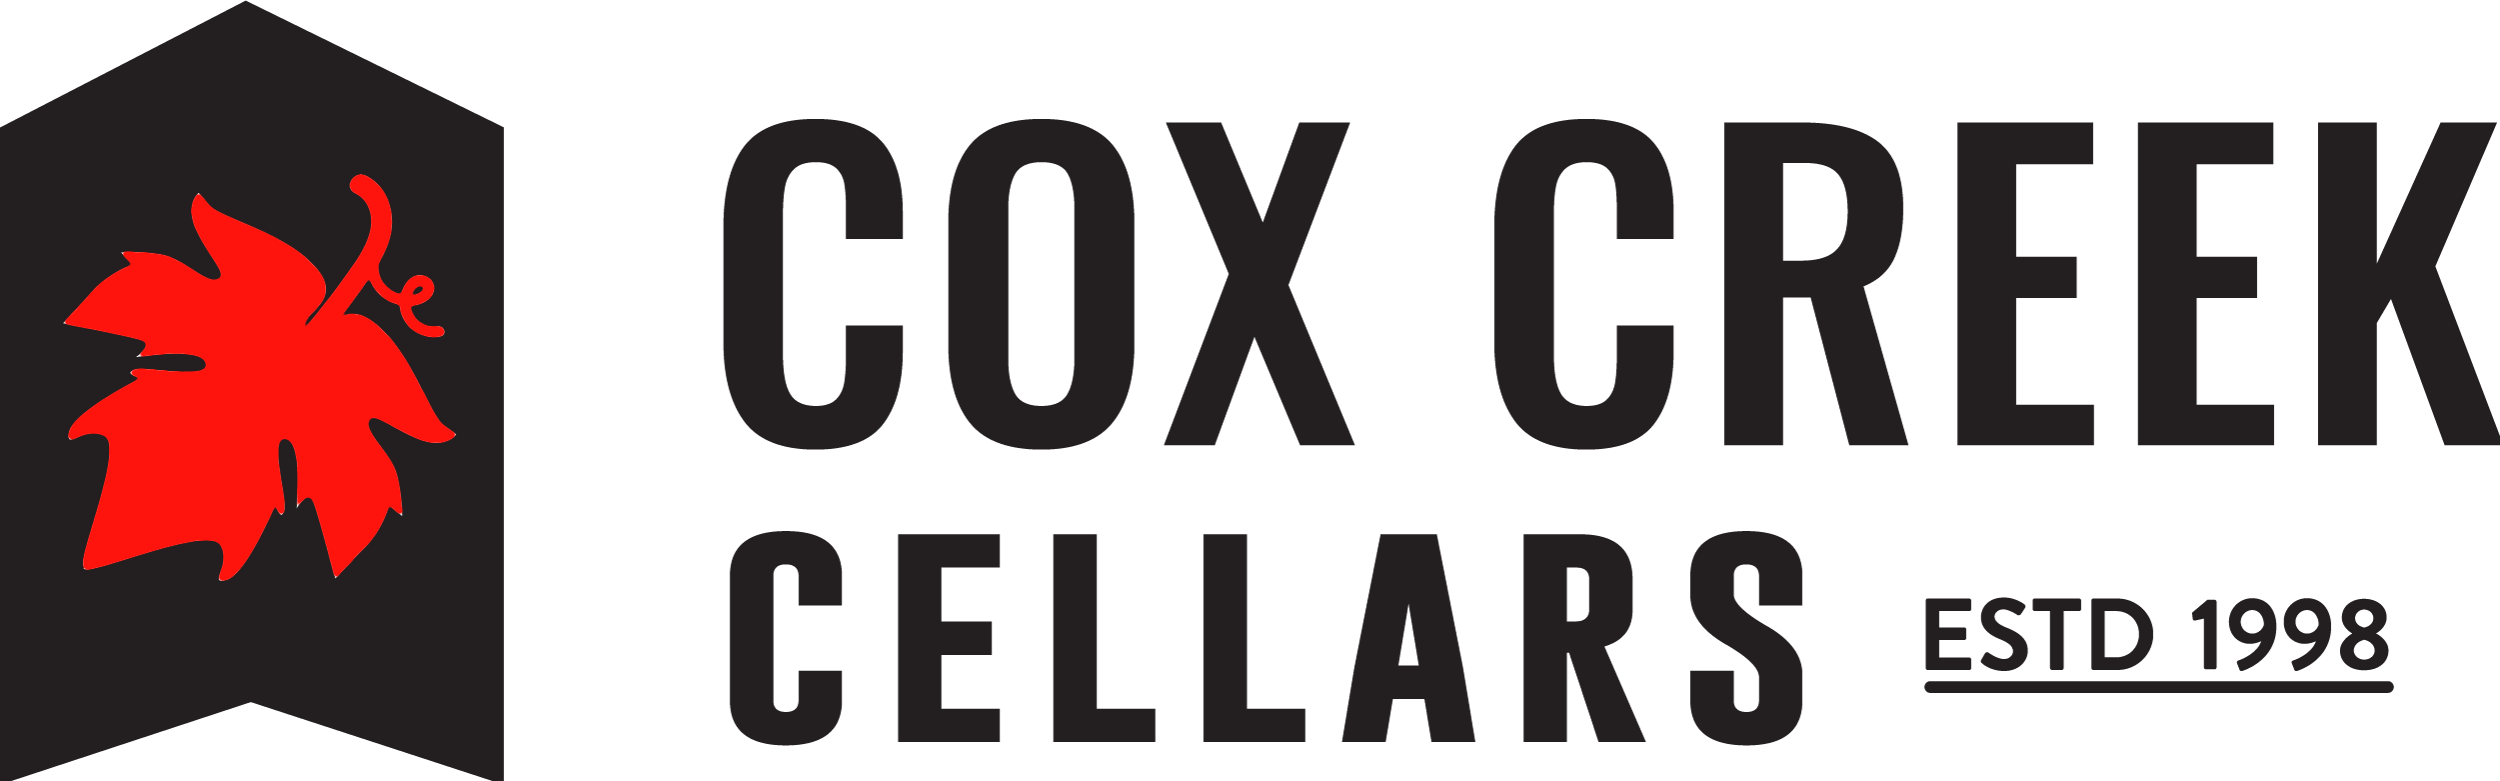 Cox Creek Cellars